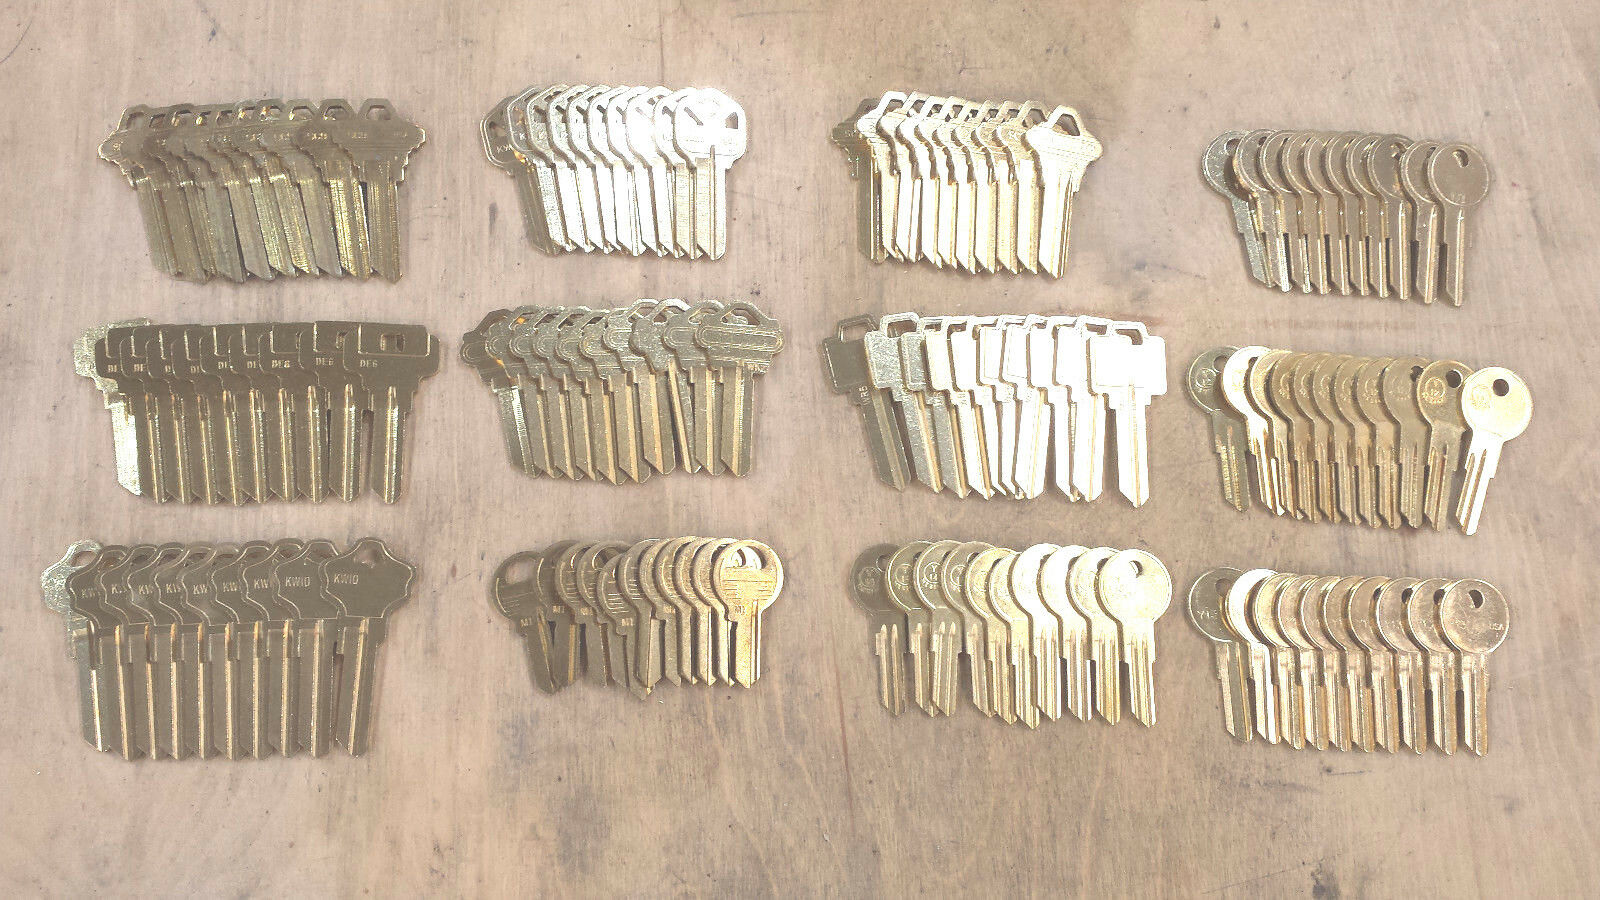 Locksmith-120-Key-Blank-Starter set-Variety Pack-10 each of 12 common blanks-Lot